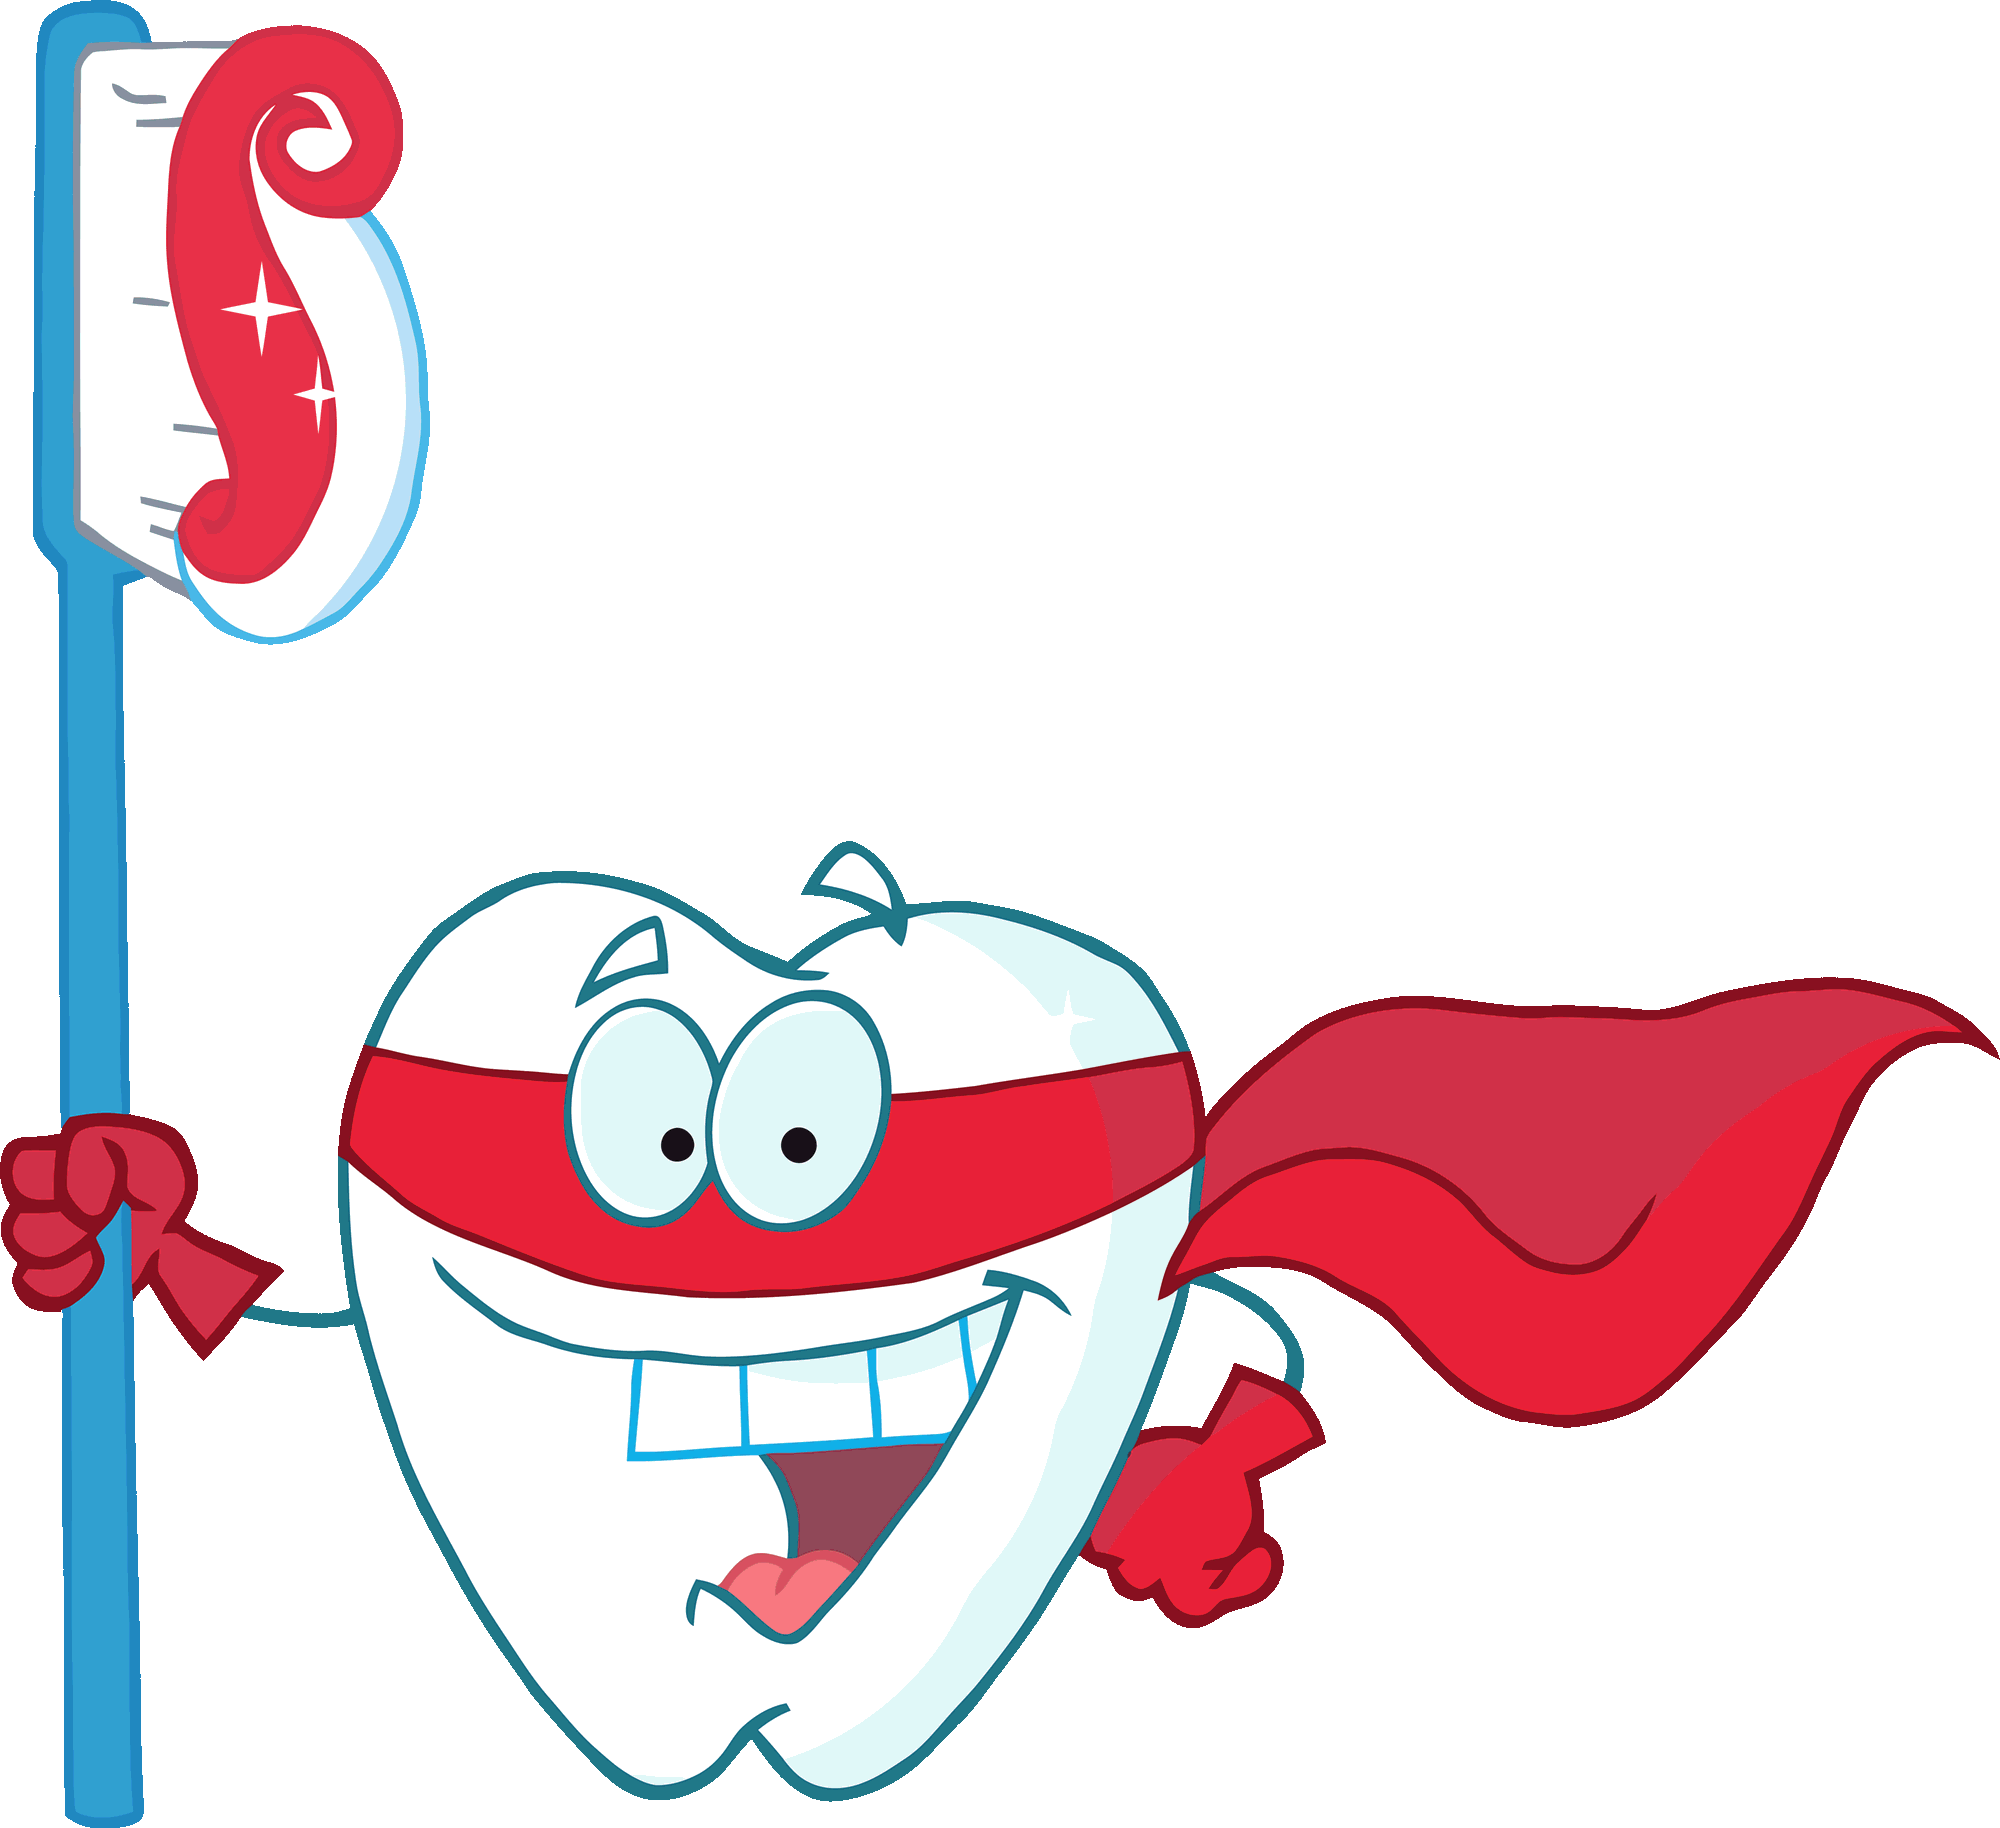 Free Dental Smile Cliparts, Download Free Dental Smile